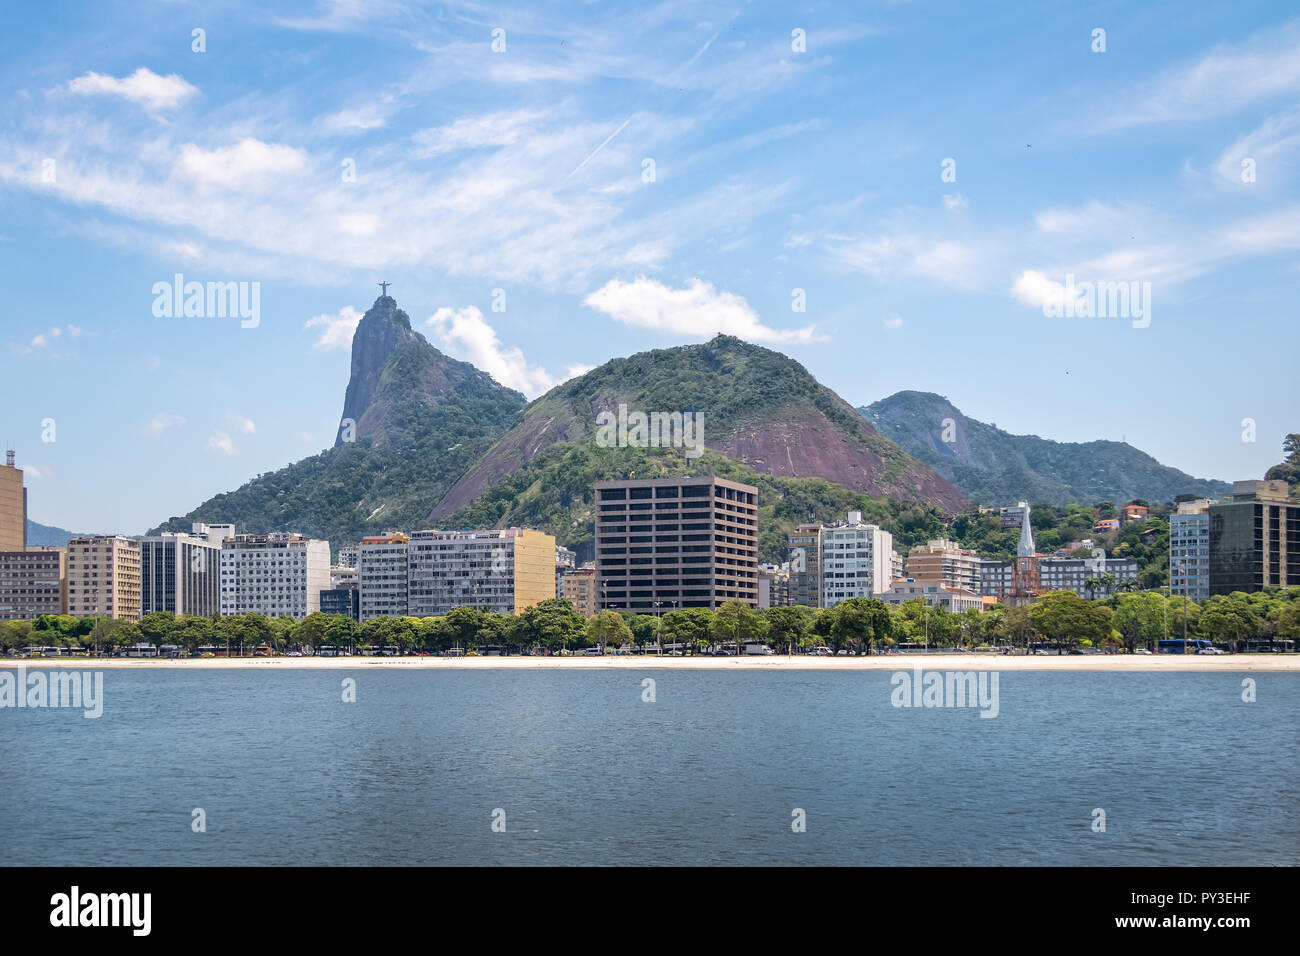 Botafogo skyline with Corcovado mountain on background - Rio de Janeiro, Brazil Stock Photo